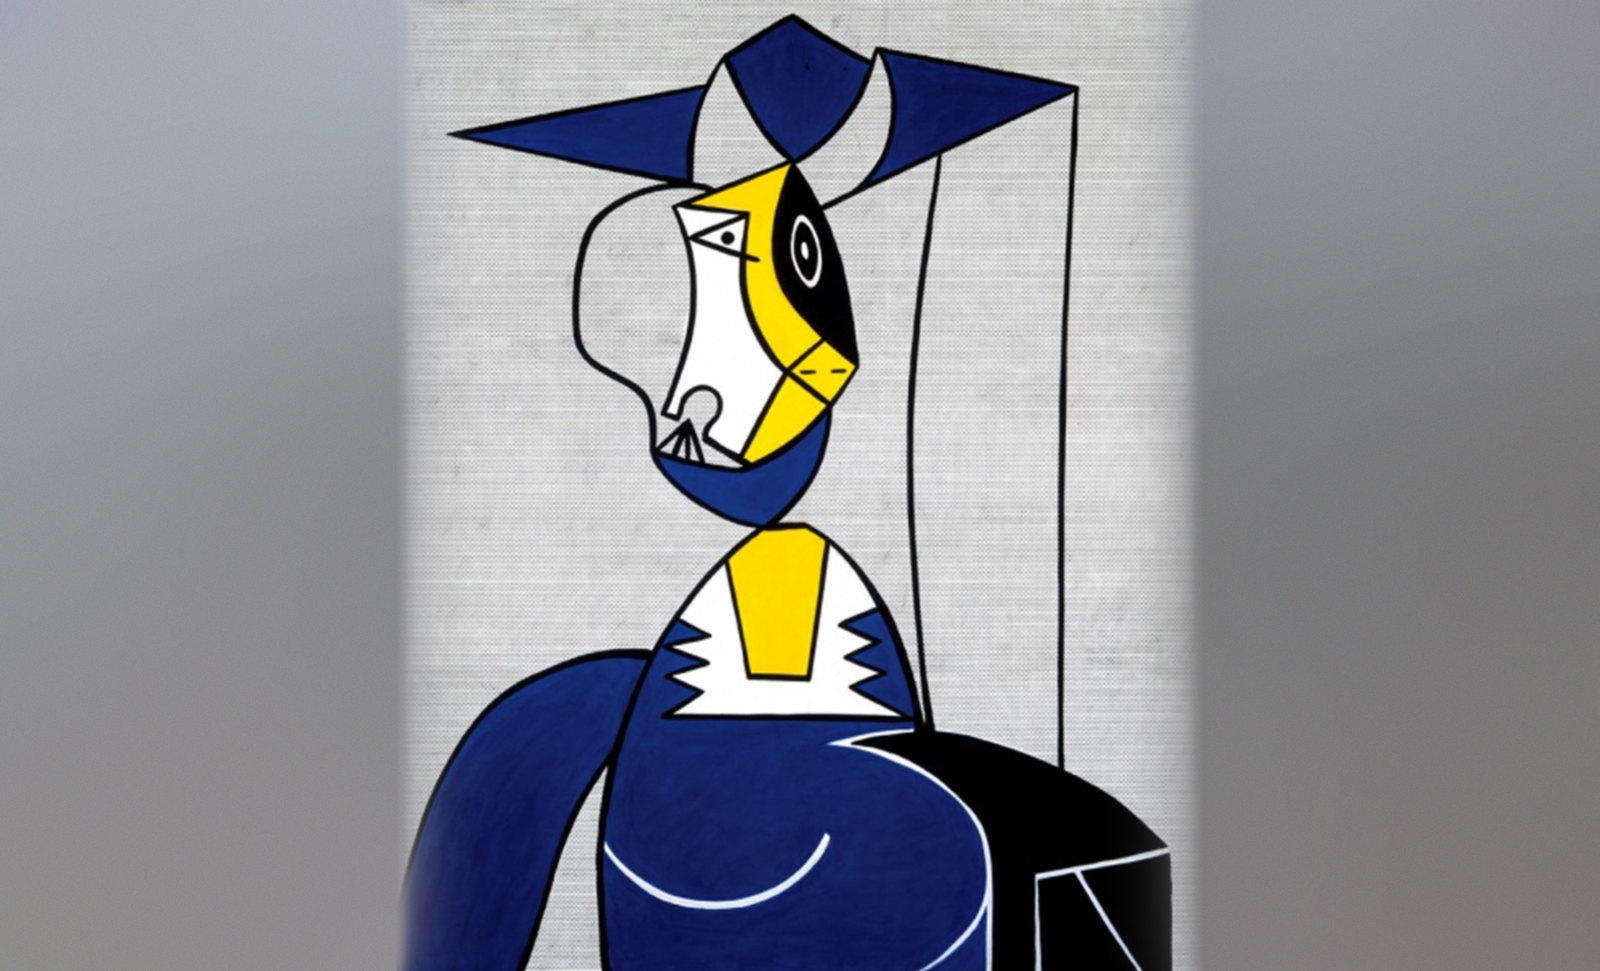 Mujer en Gris, caracterización de Pablo Picasso (1942), recreación de Roy Lichtenstein (1962).